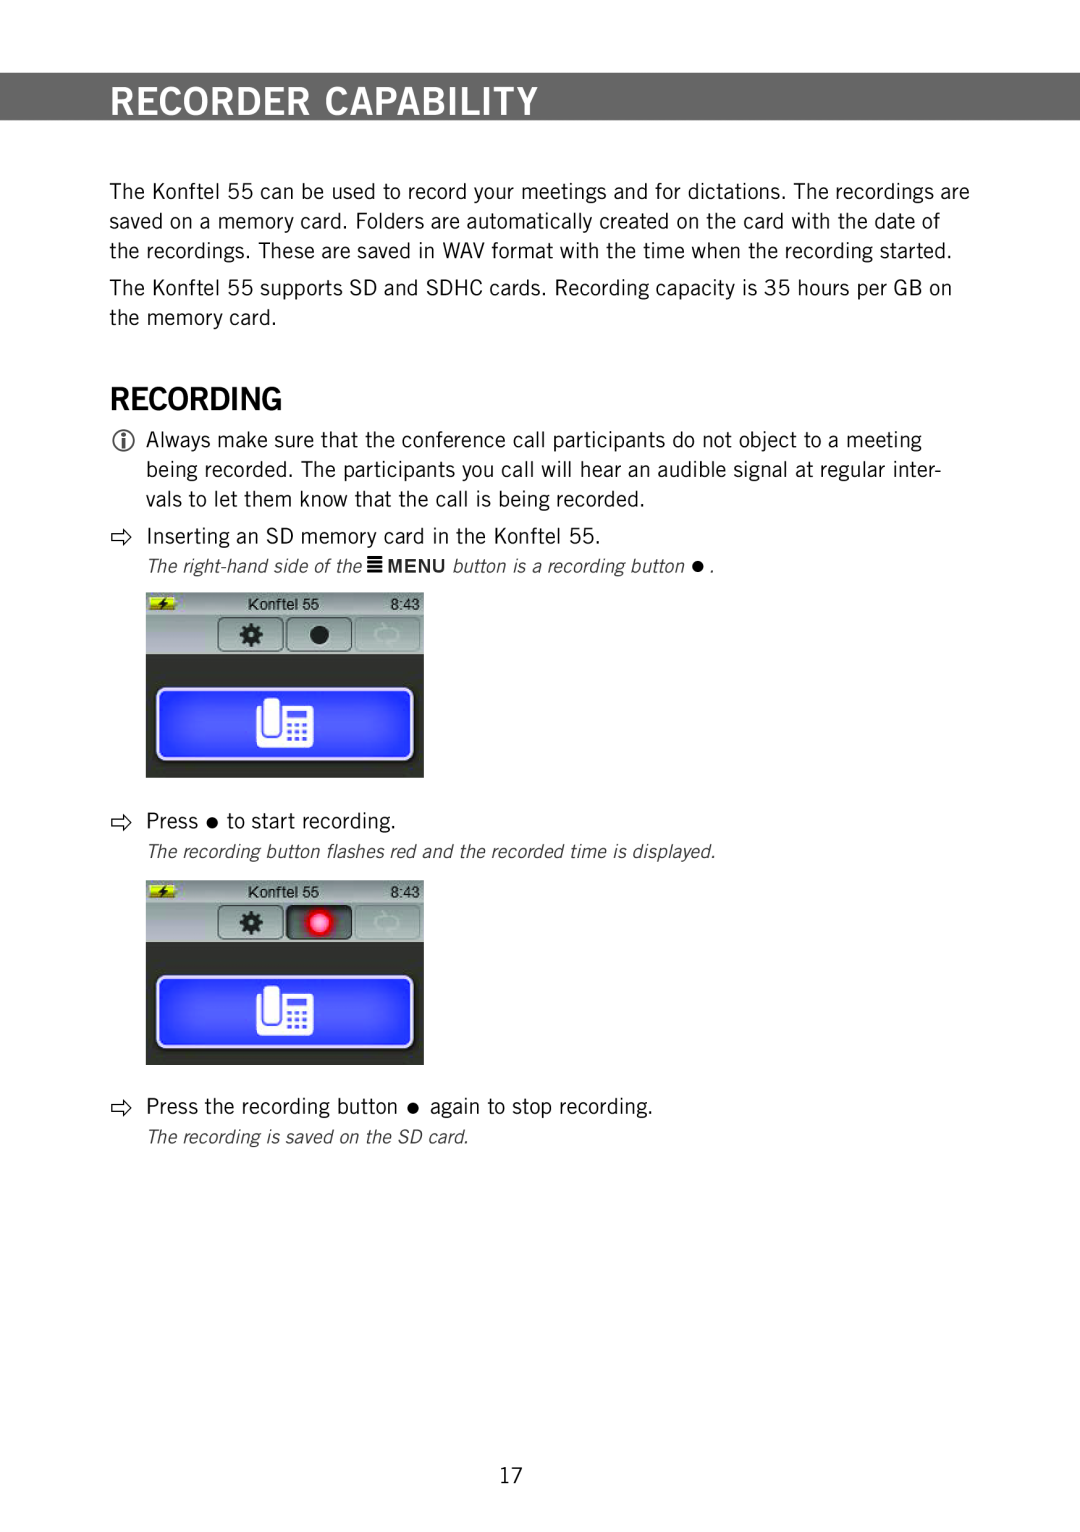 Konftel 55 manual Recorder Capability, Recording 